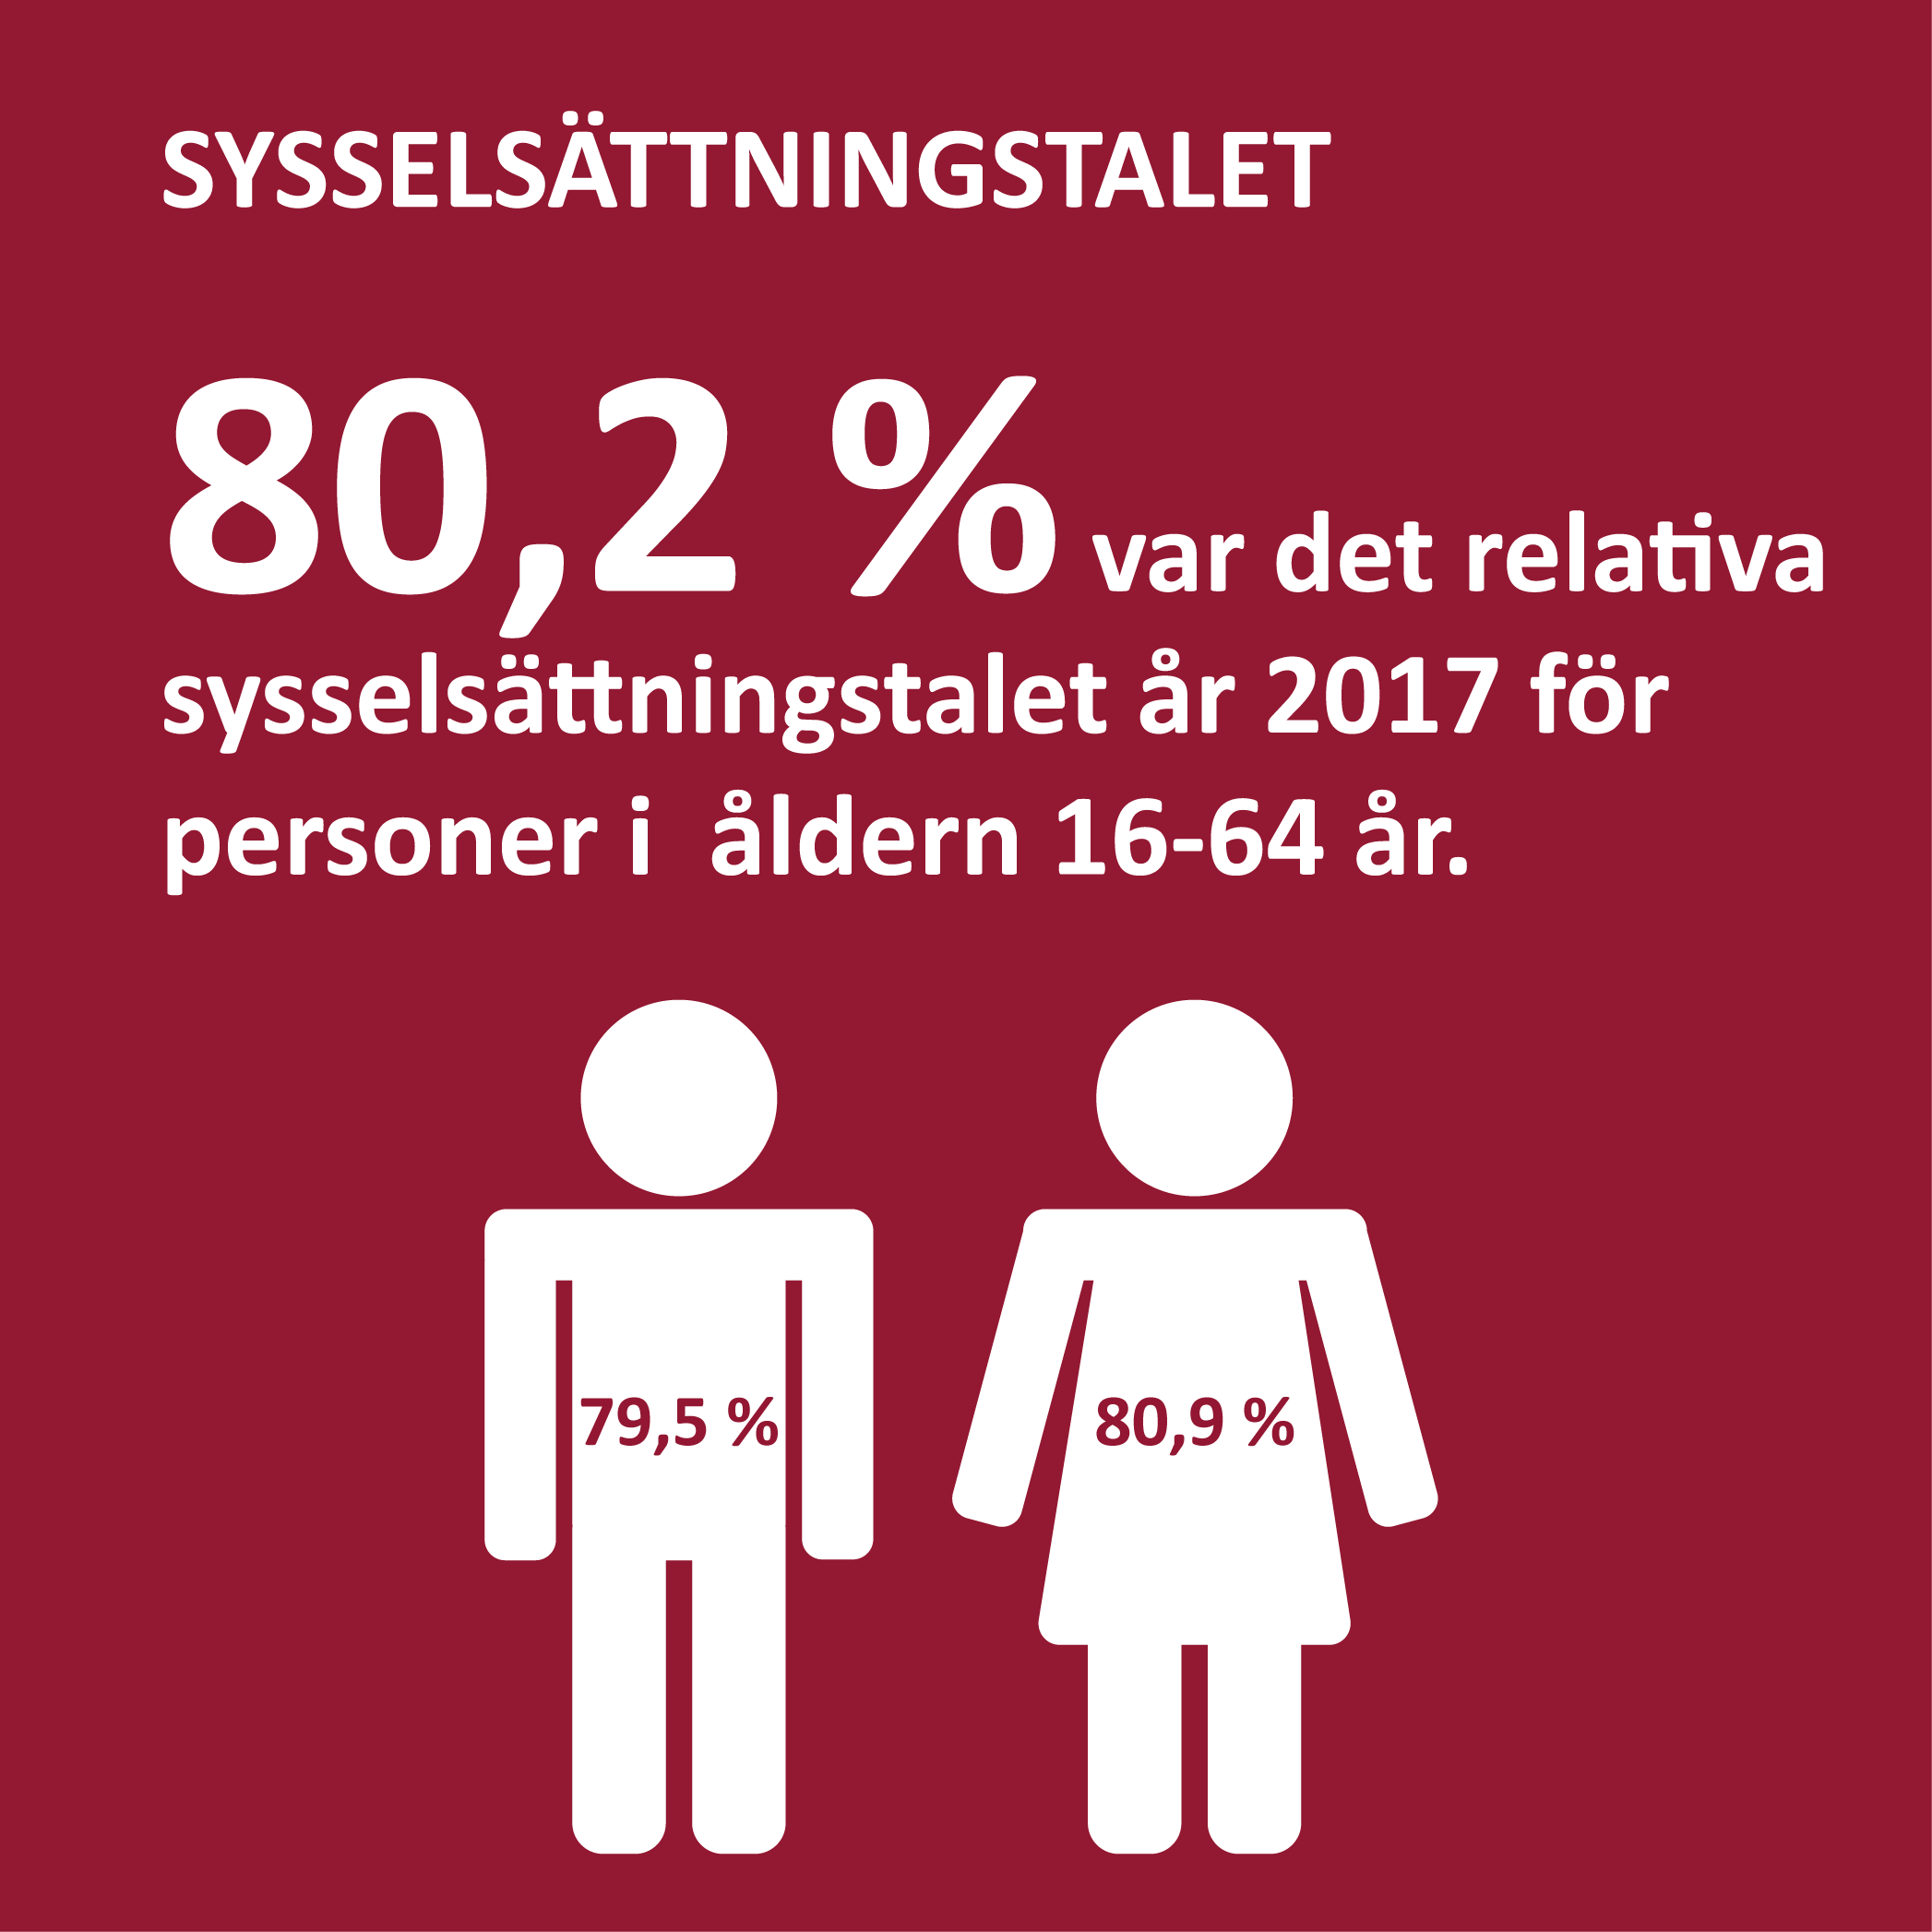 Infografik om sysselsättningstalet på Åland